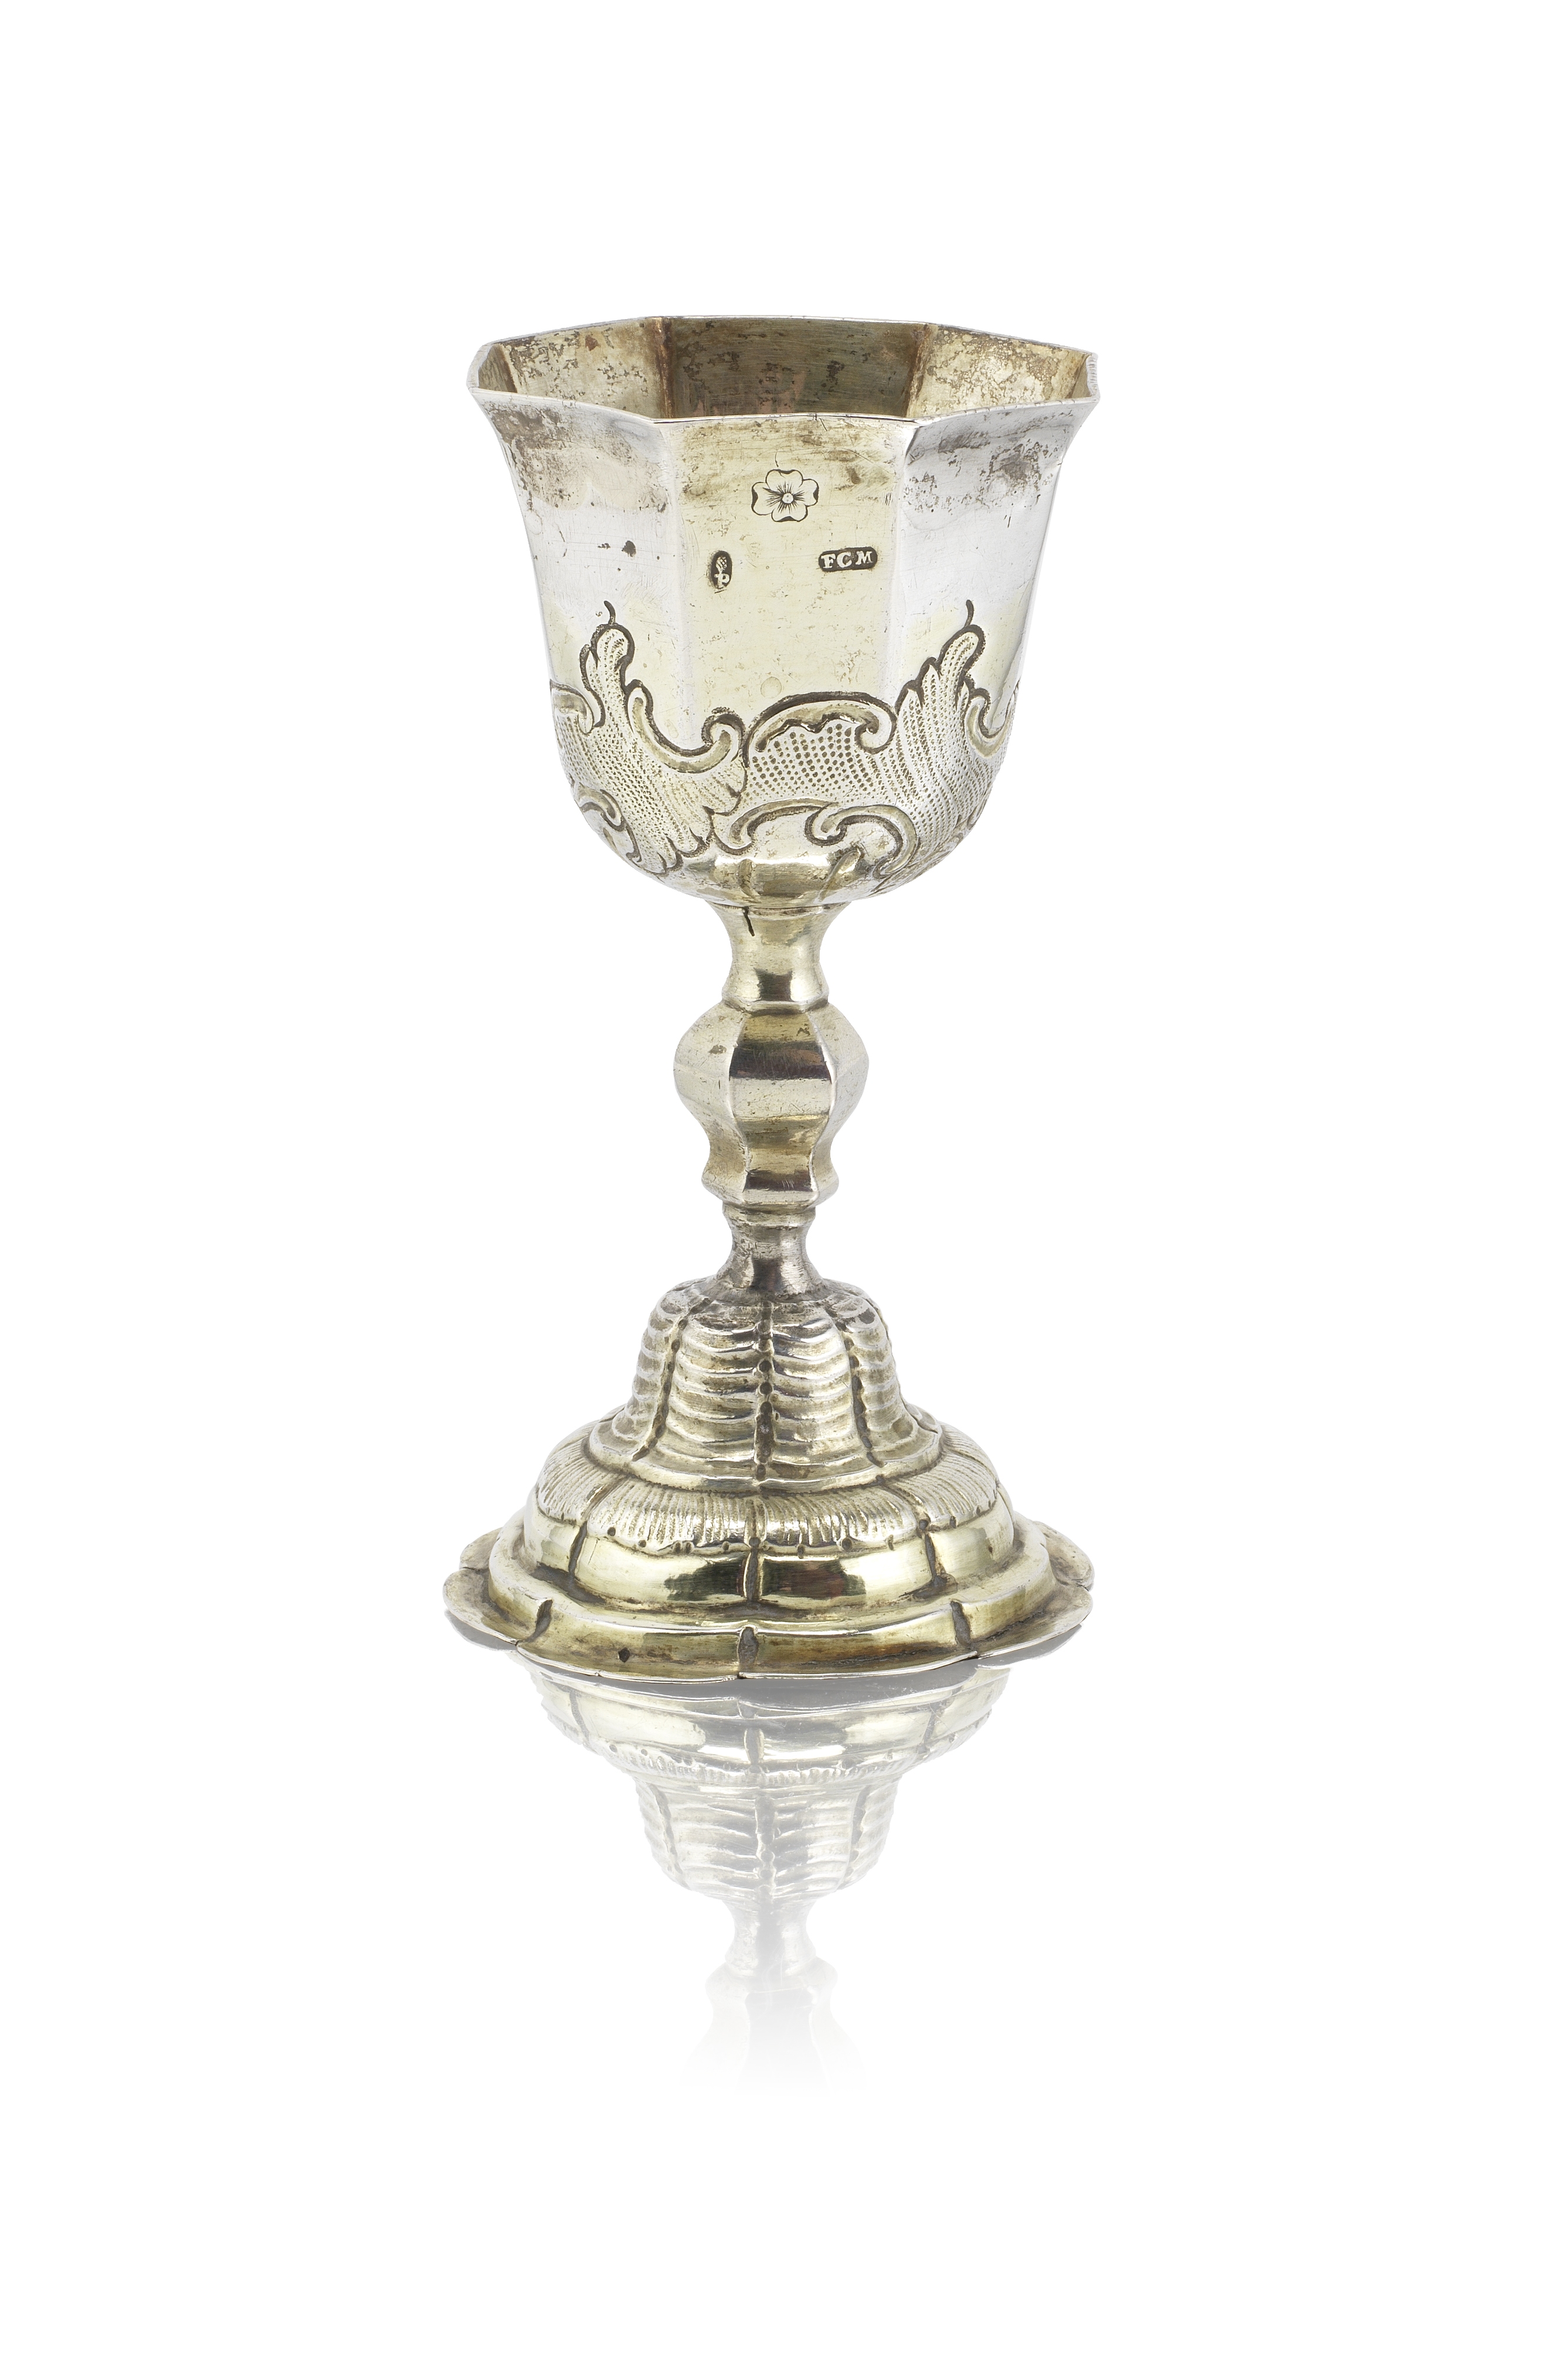 An 18th century German silver-gilt Kiddush cup Franz Christoph Mederle, Augsburg 1761 - 1763